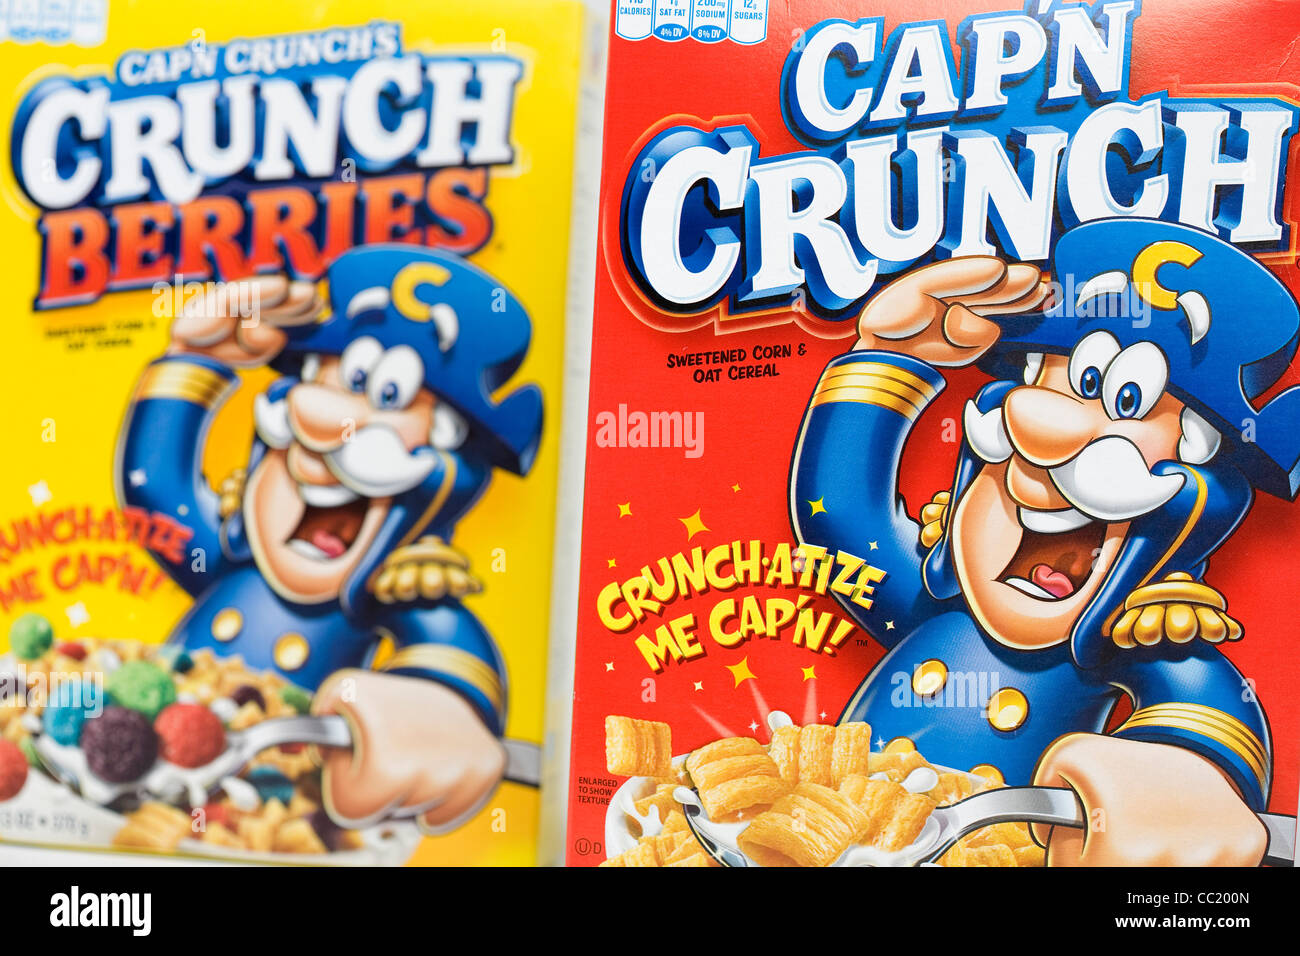 Cap'n Crunch's Crunch Berries and Cap'n Crunch breakfast cereal. Stock Photo